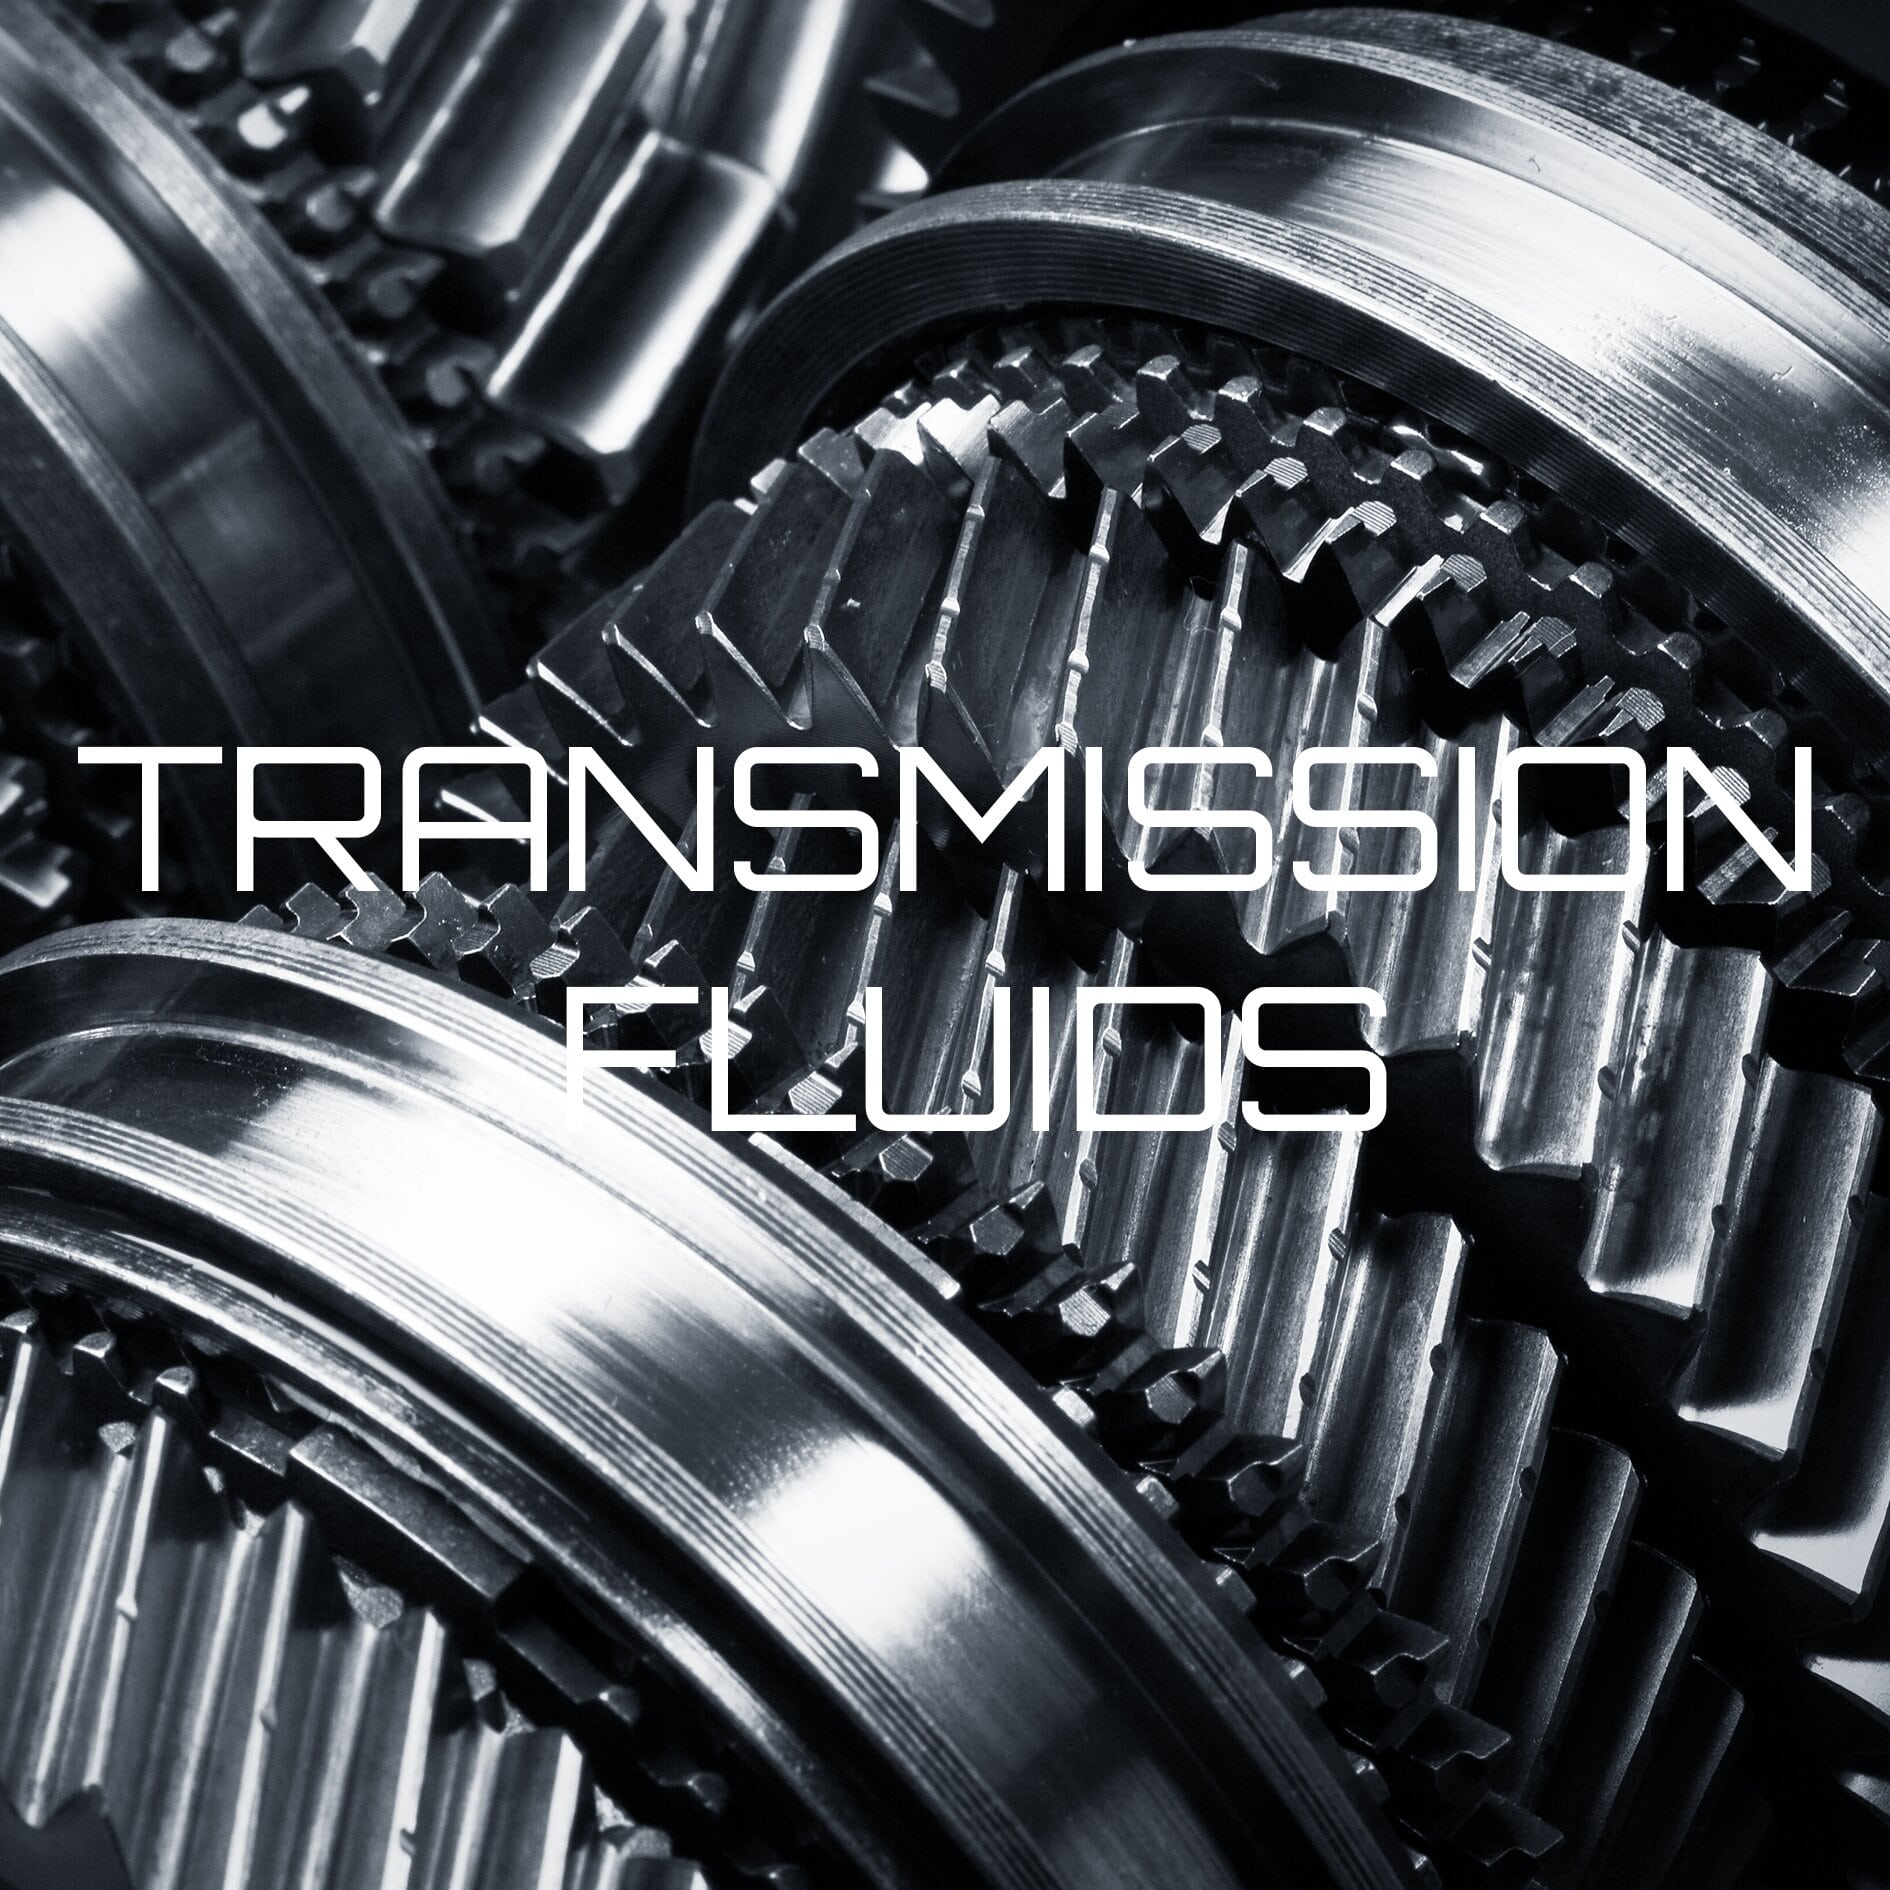 Transmission Fluids